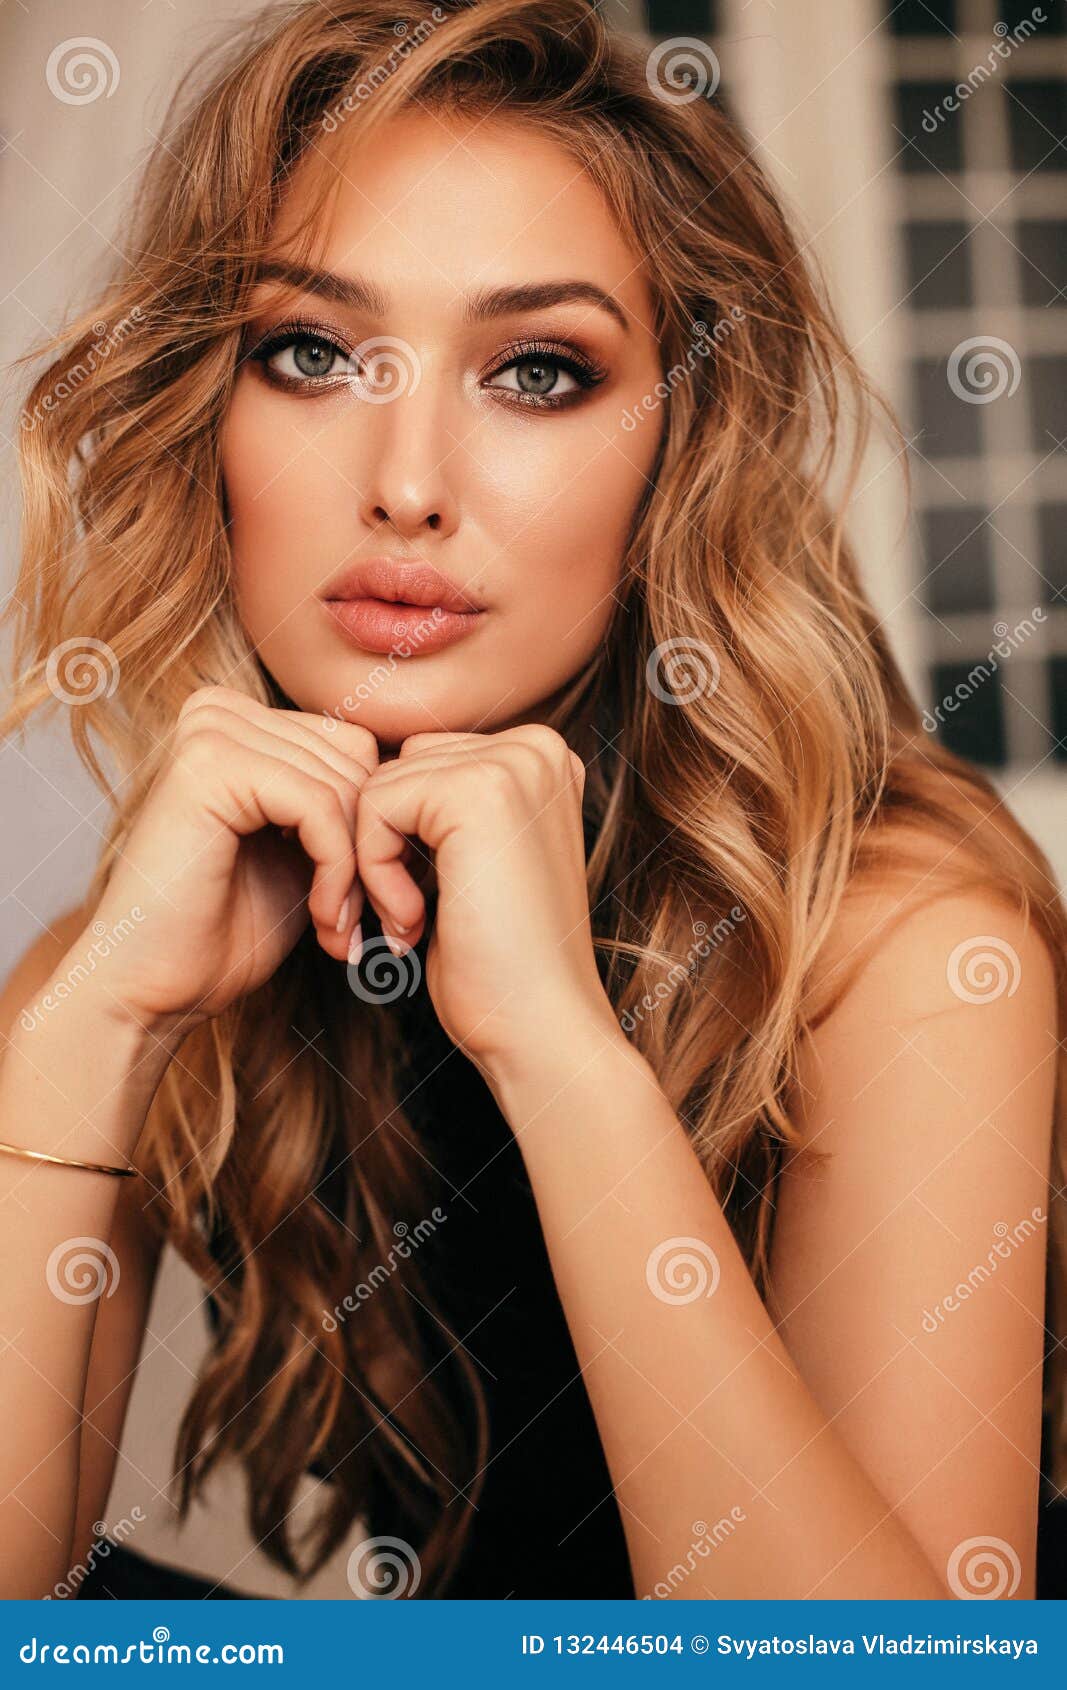 https://thumbs.dreamstime.com/z/fashion-interior-photo-beautiful-woman-blond-curly-hair-elegant-dress-jewelry-accessories-jewe-132446504.jpg